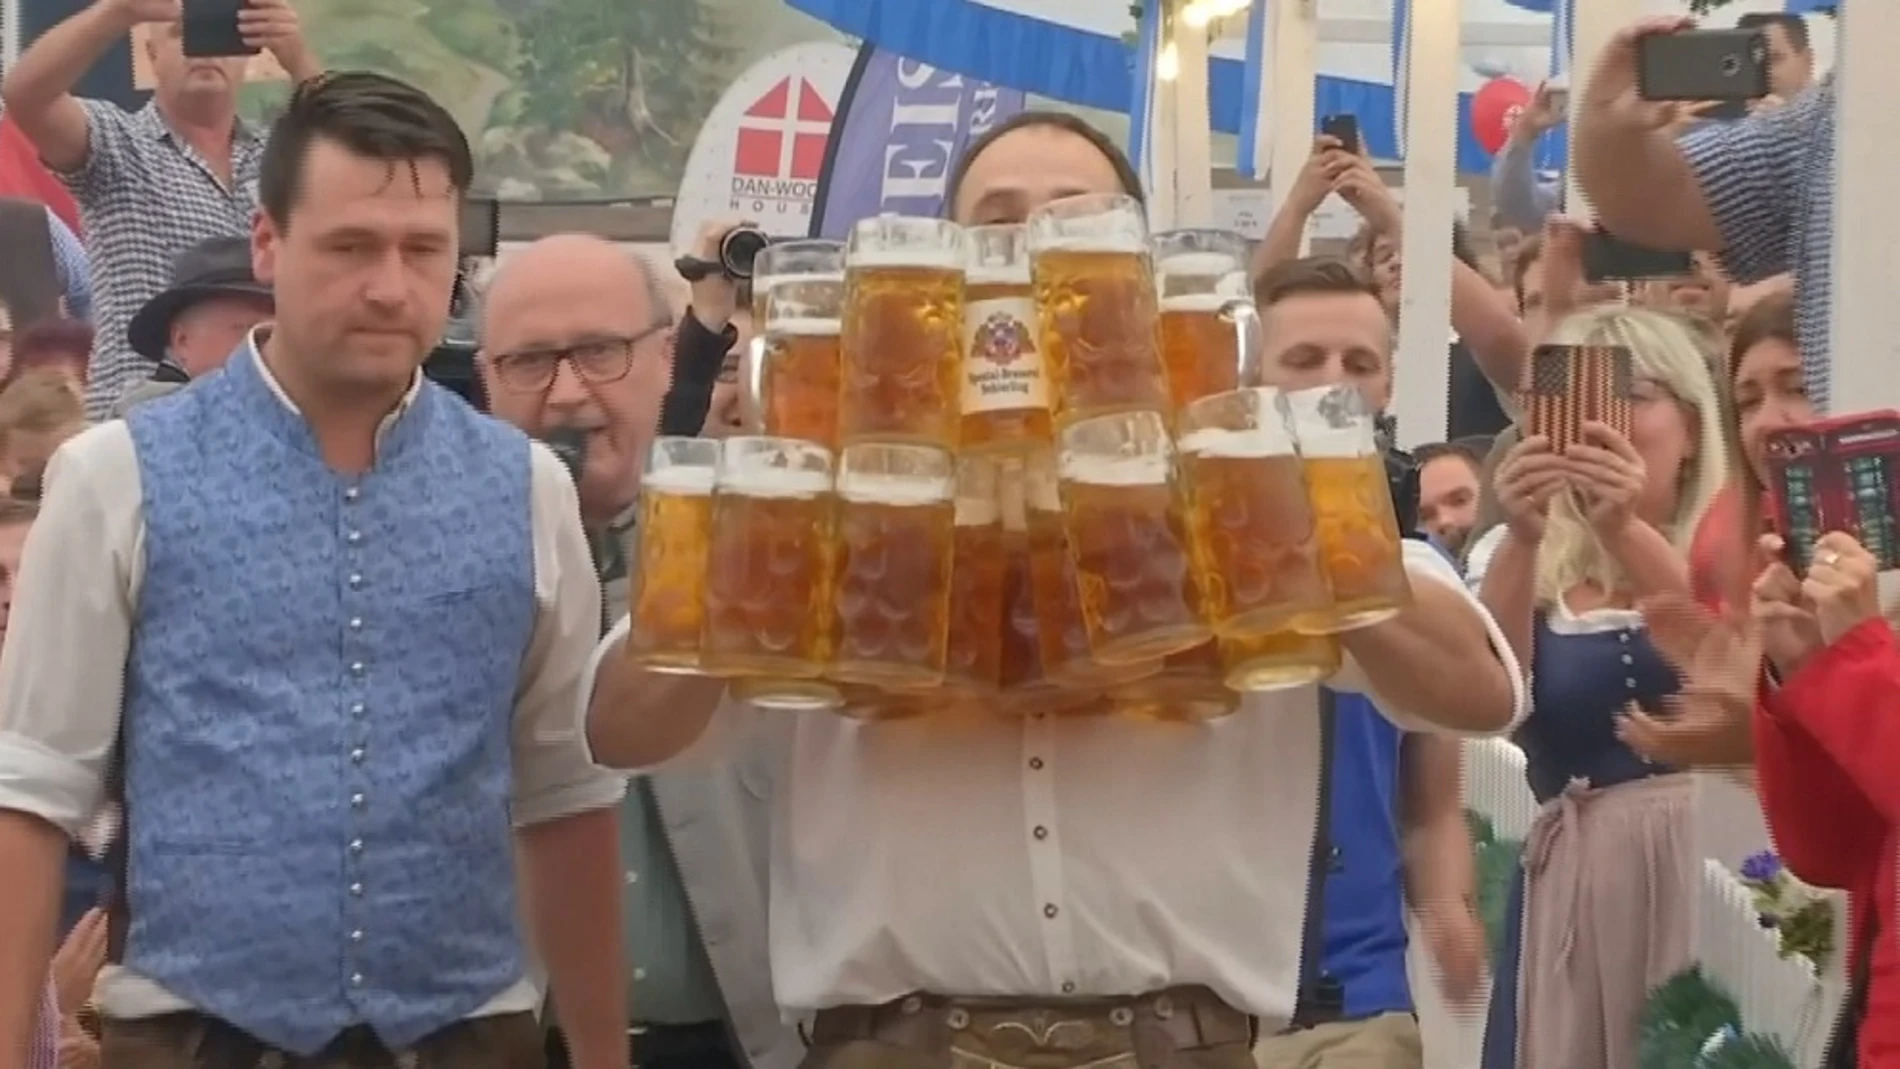 Logra un Record Guinness al conseguir transportar 29 jarras de un litro de cerveza sin derramarse